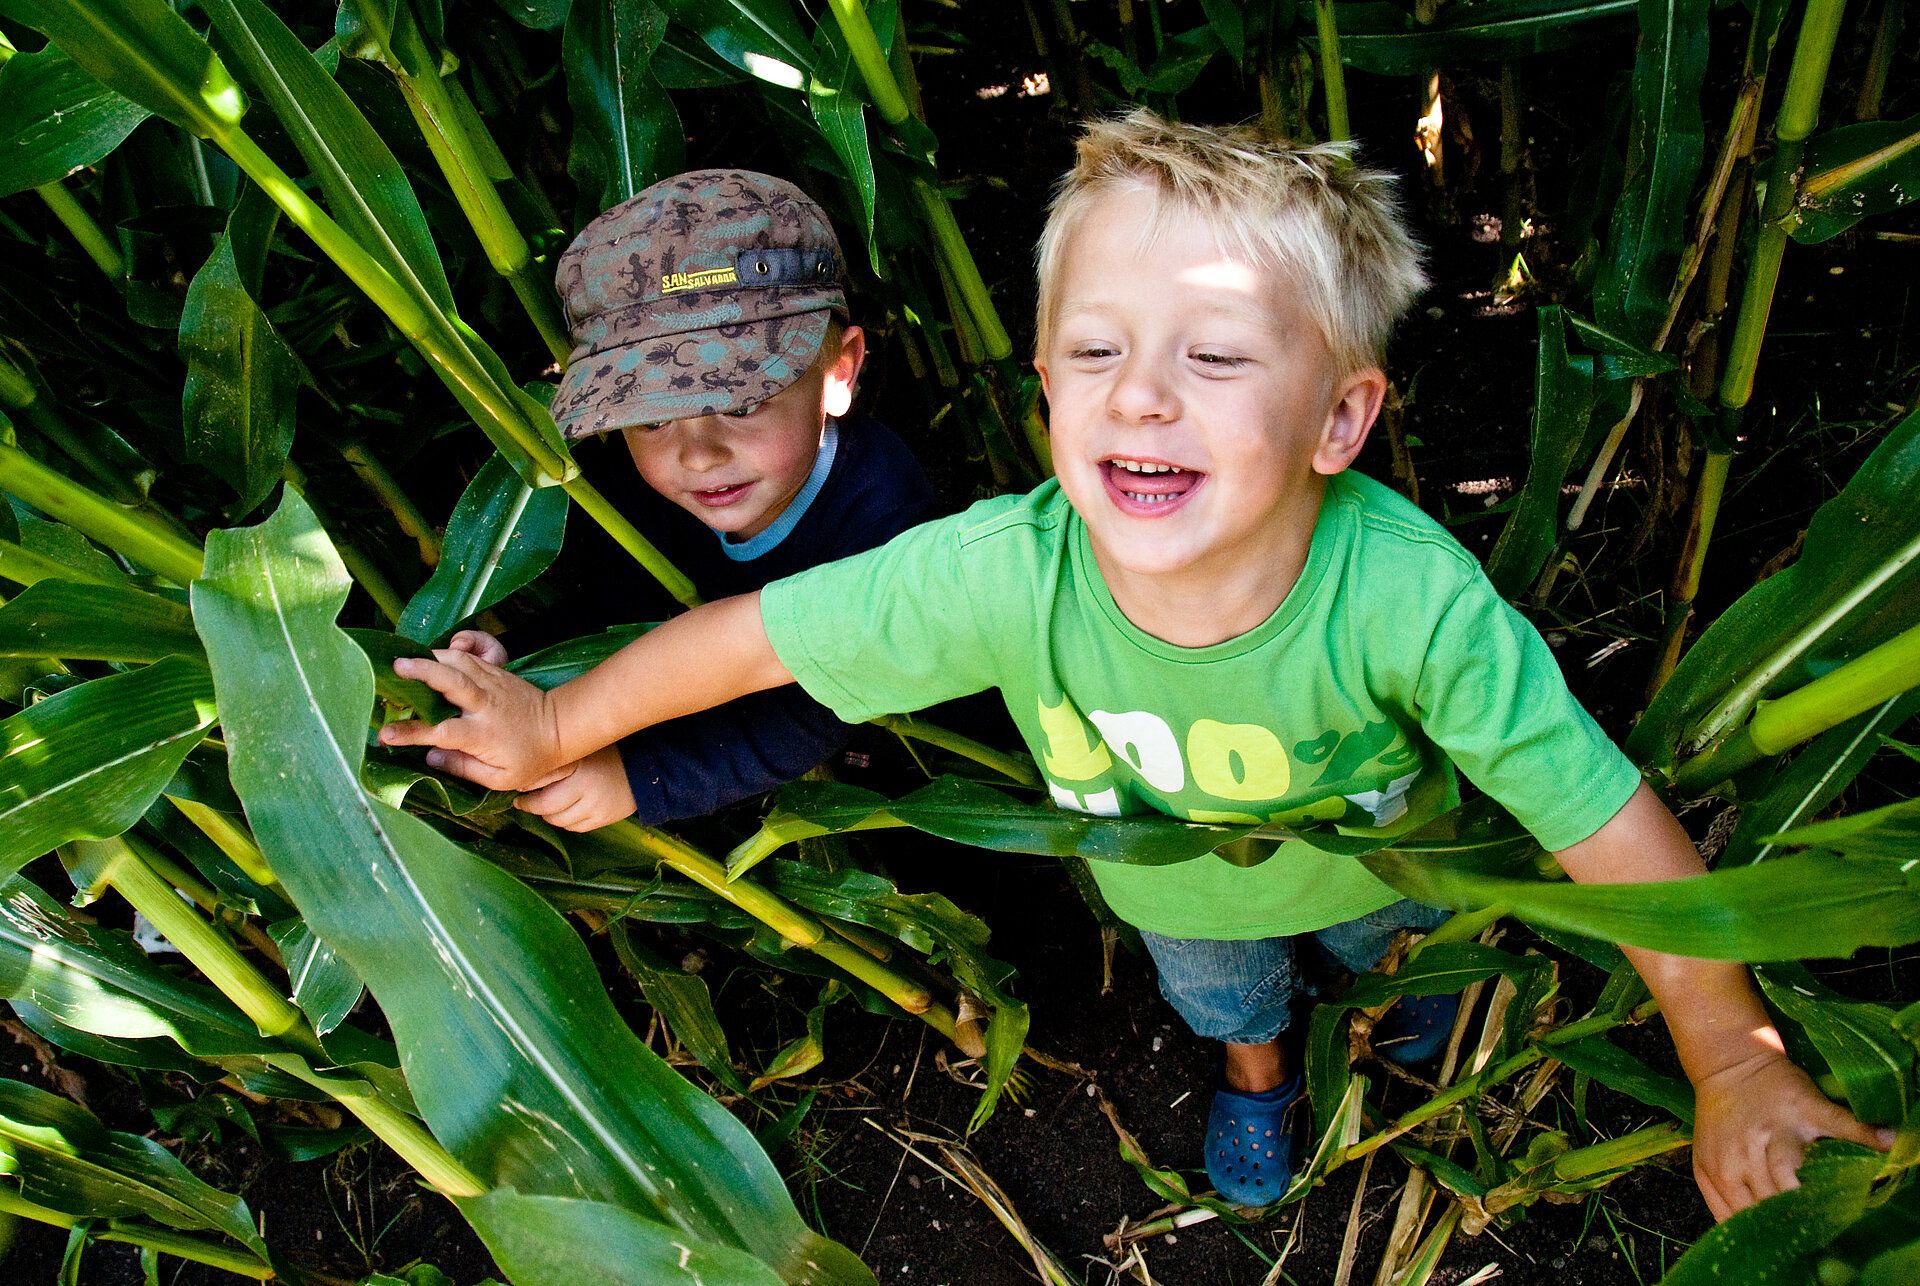 Zwei Jungs durchstreifen das meterhohe Maisfeld im Oderdinger Maislabyrinth.